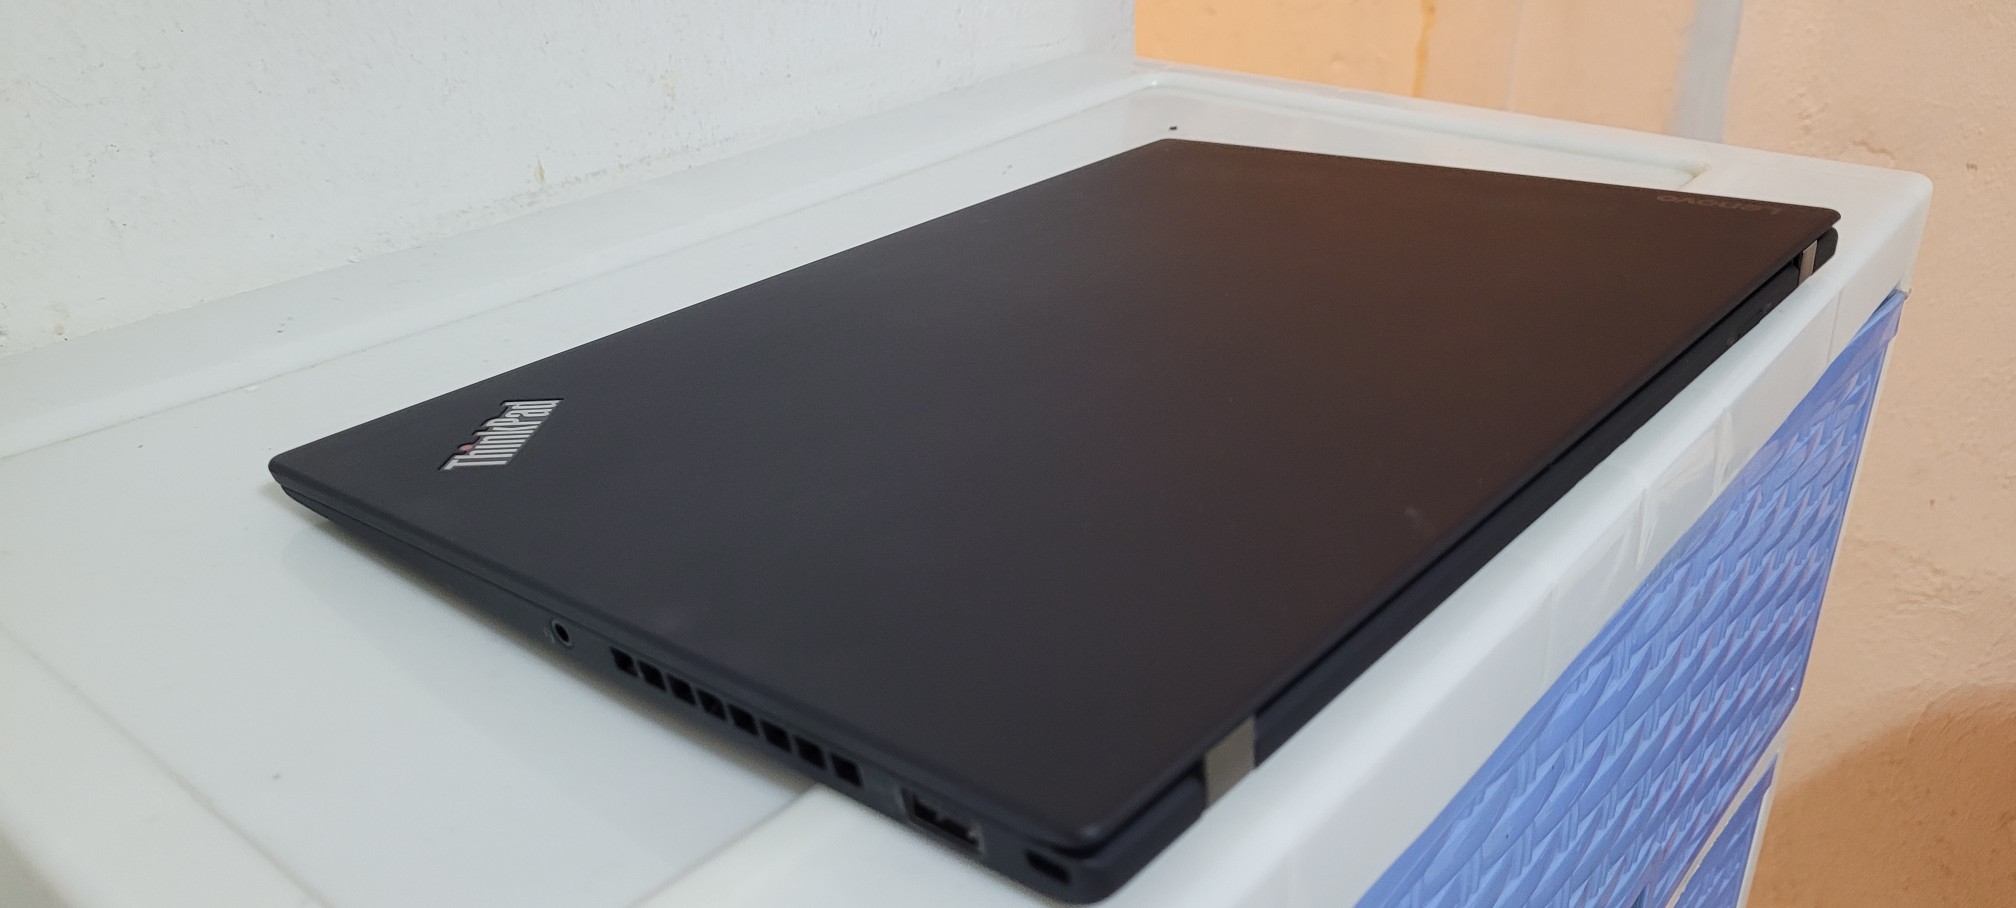 computadoras y laptops - Lenovo T490 14 Pulg Core i5 8va Gen Ram 16gb ddr4 Disco 256gb Solido Video 8gb 2